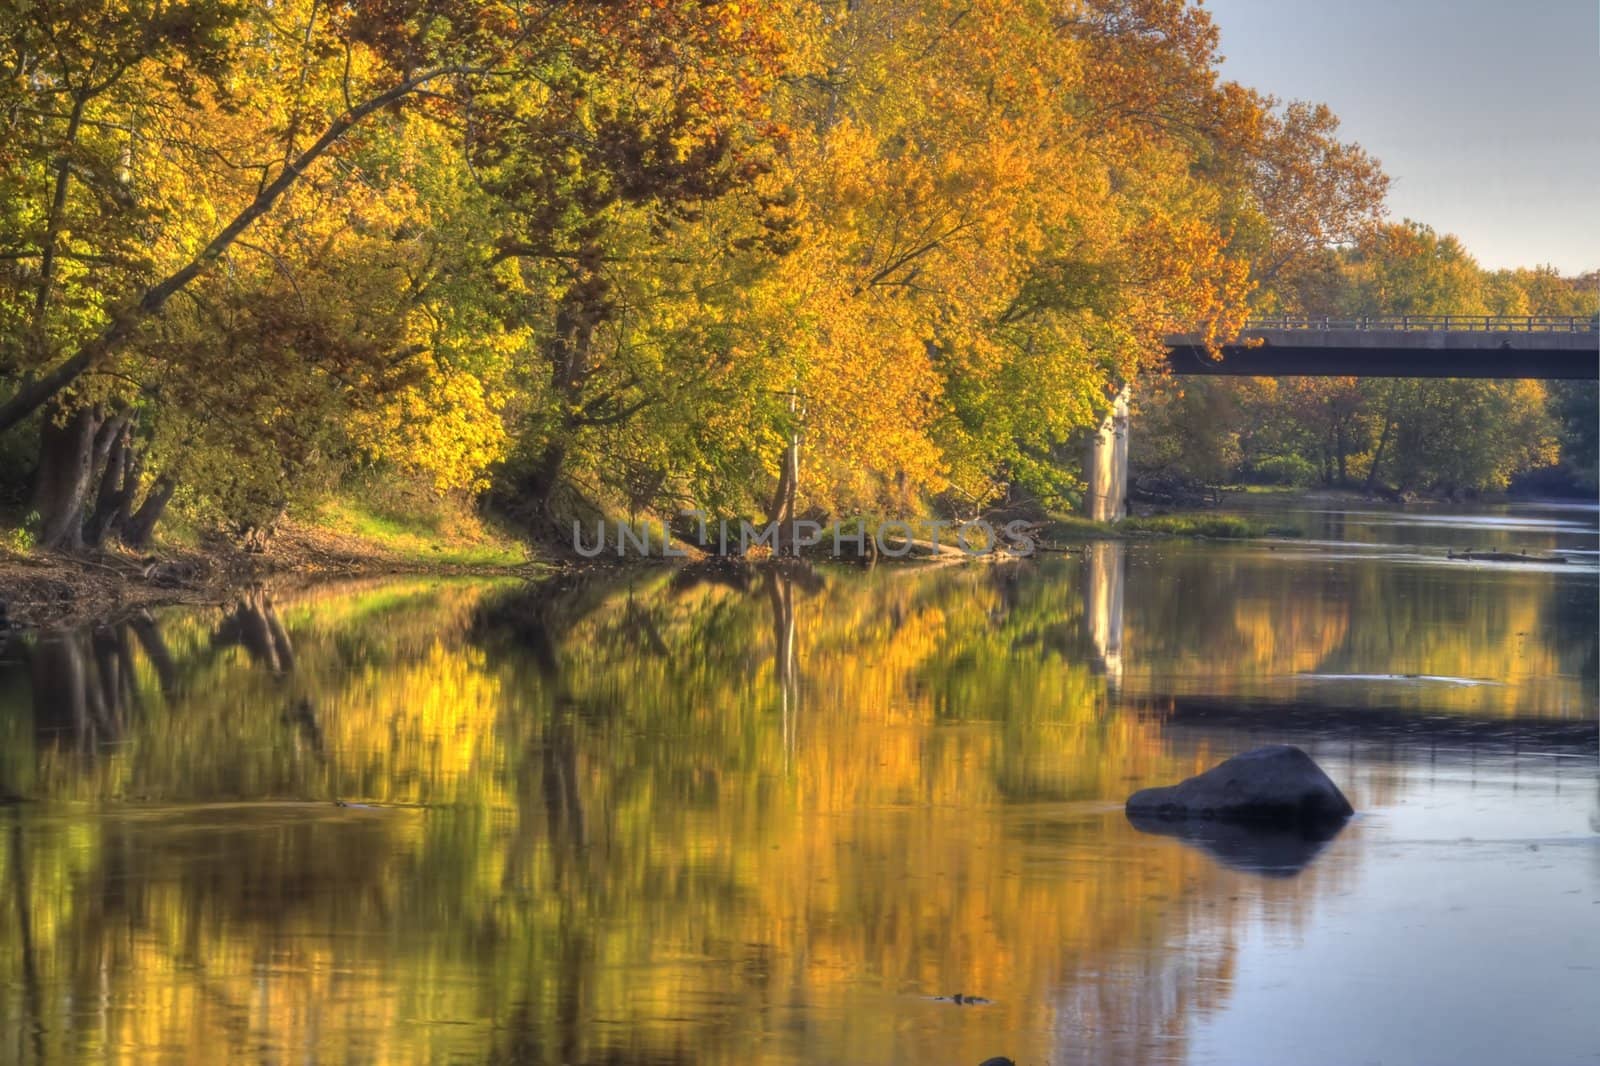 River in Fall by jasony00